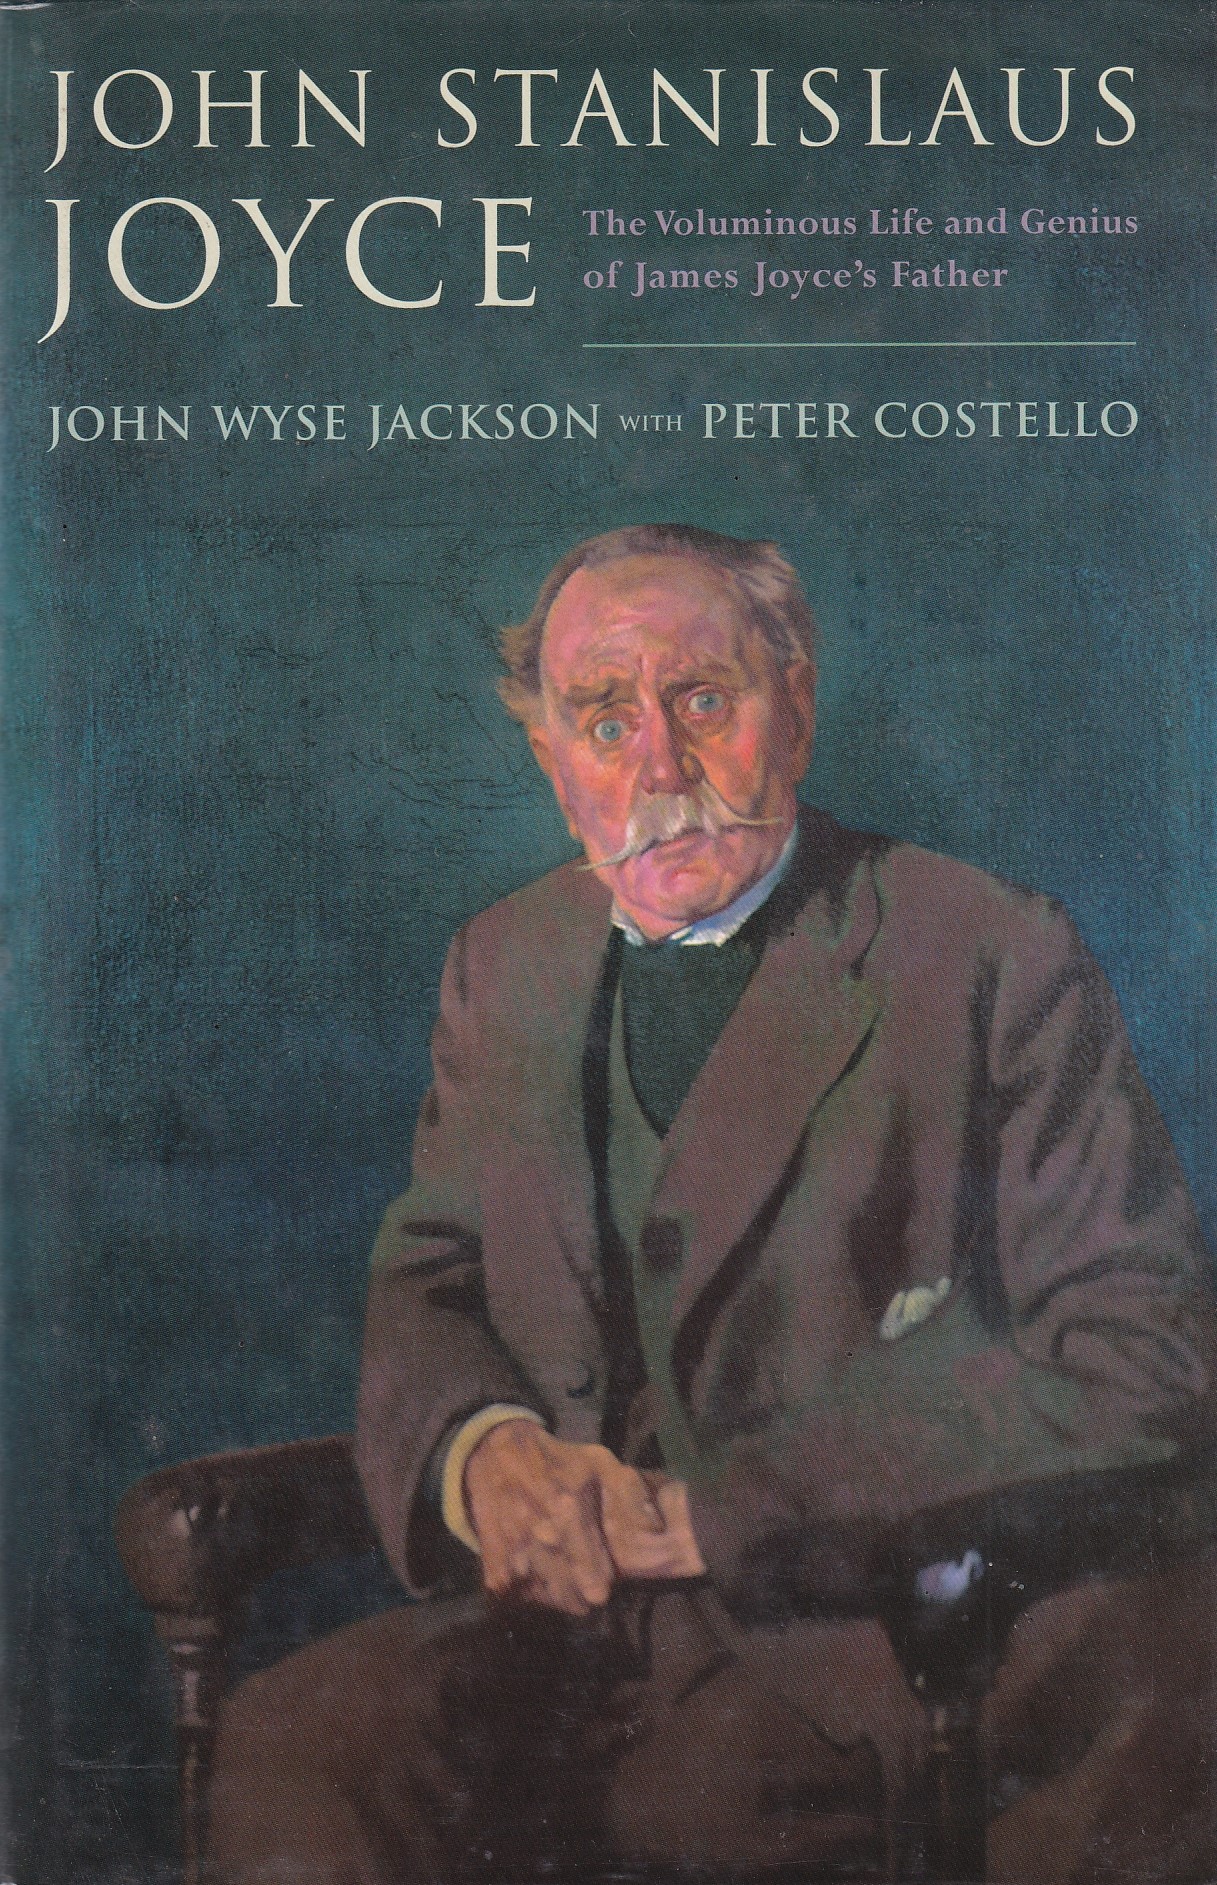 John Stanislaus Joyce: The Voluminous Life and Genius of James Joyce’s Father by John Wyse Jackson with Peter Costello